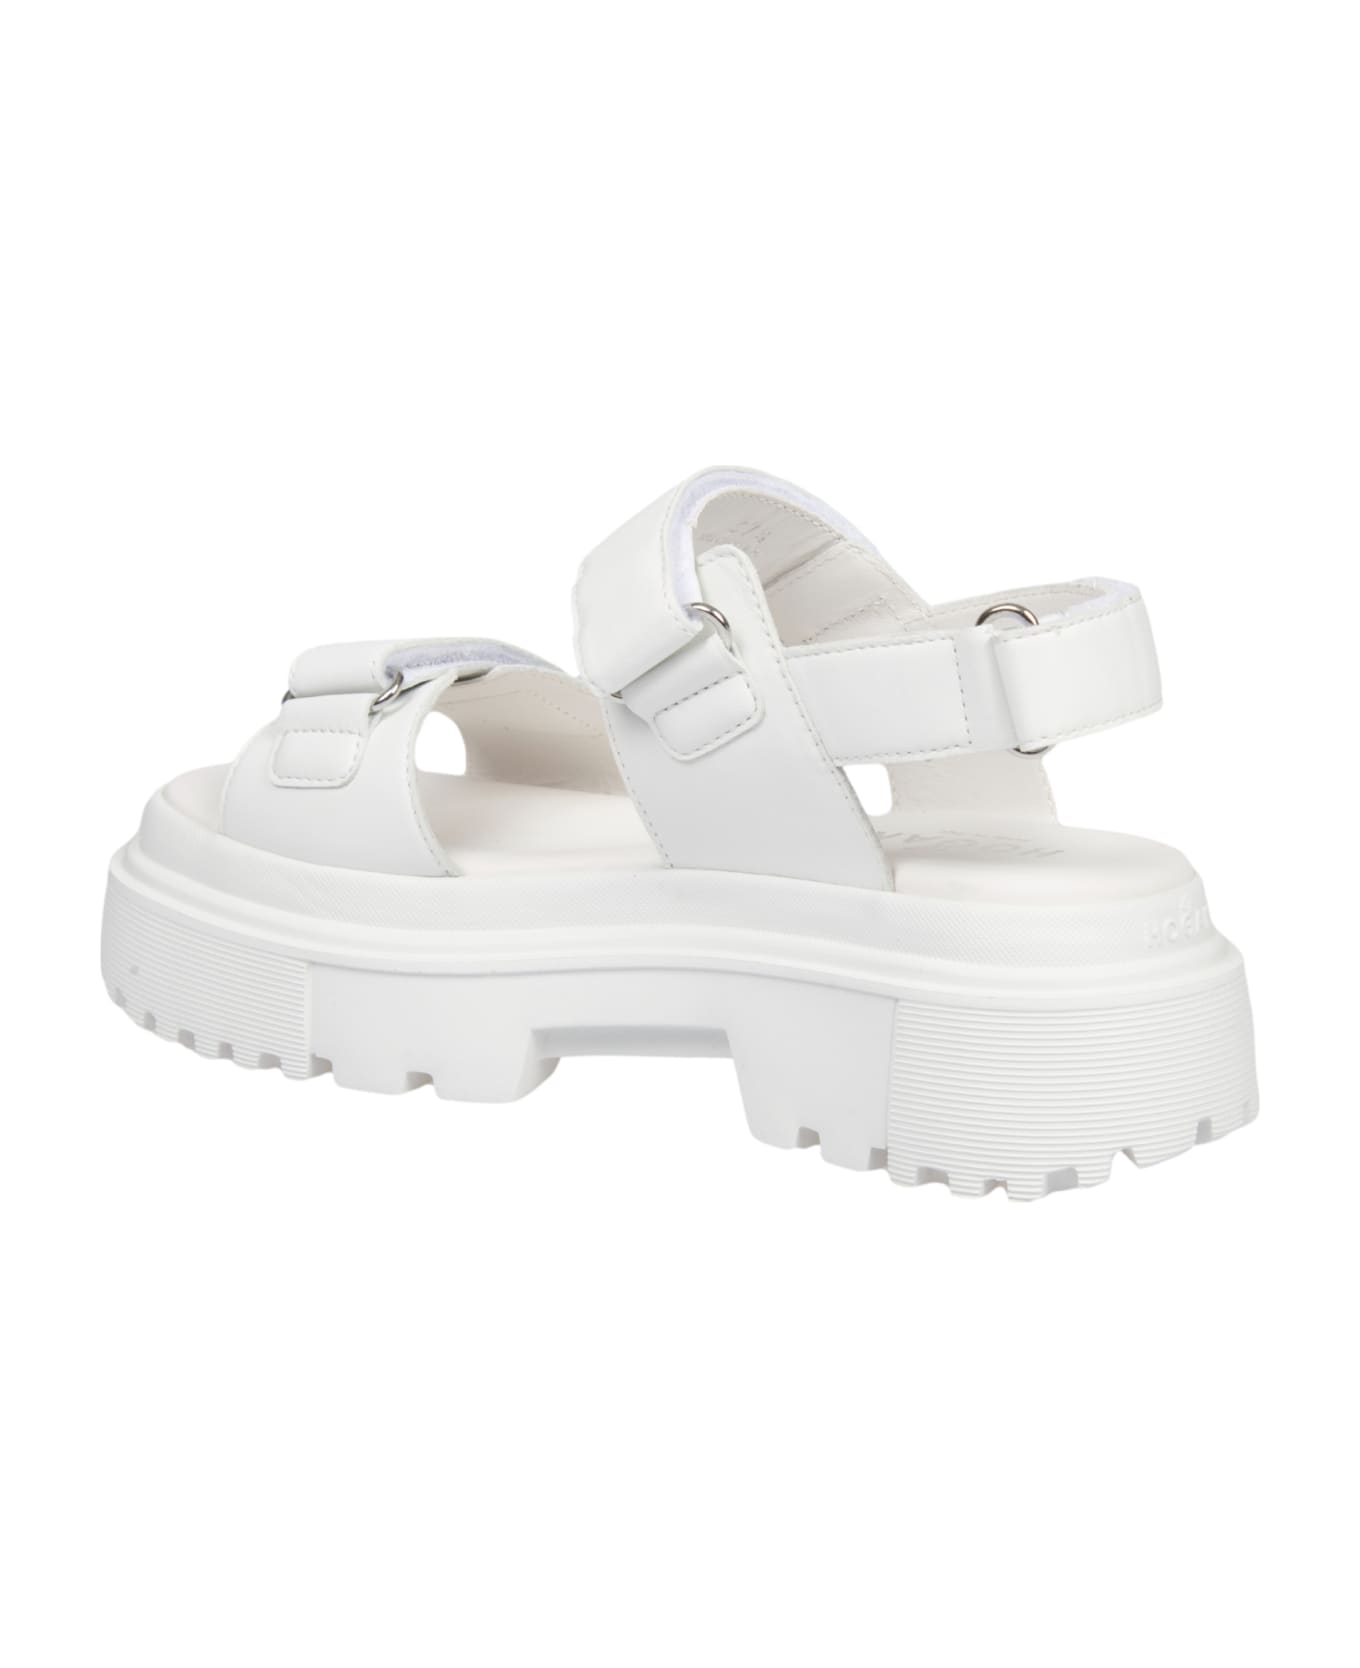 Hogan H644 Sandals - White